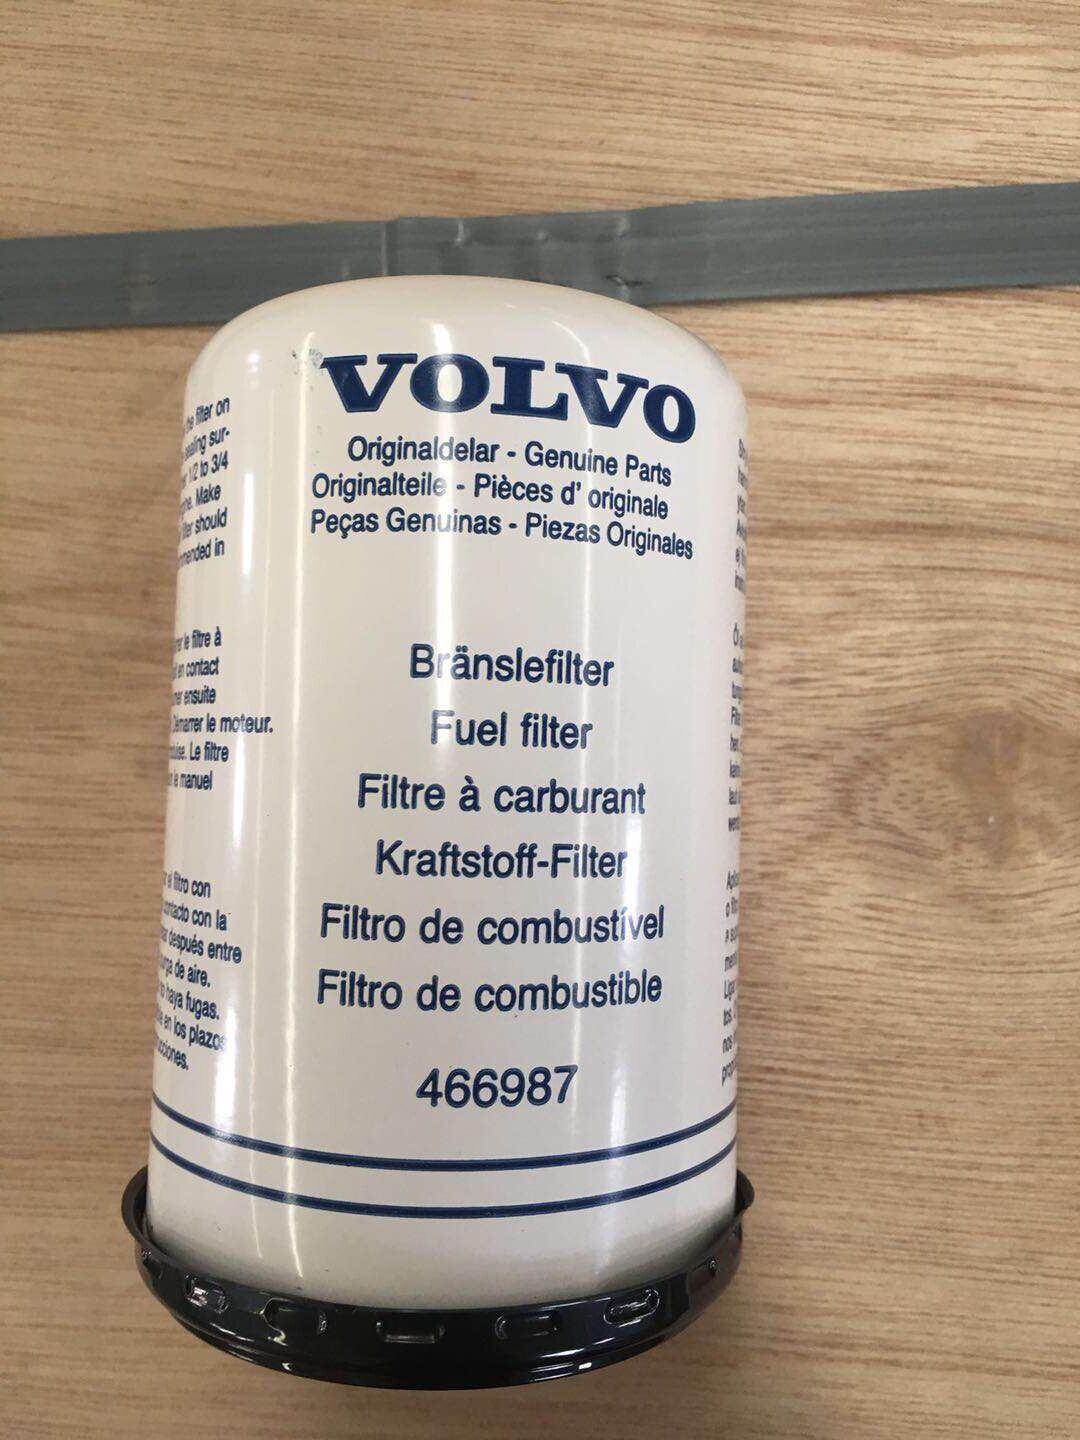 VOLVO Engine part Fuel filter 466987 for SDLG Excavator